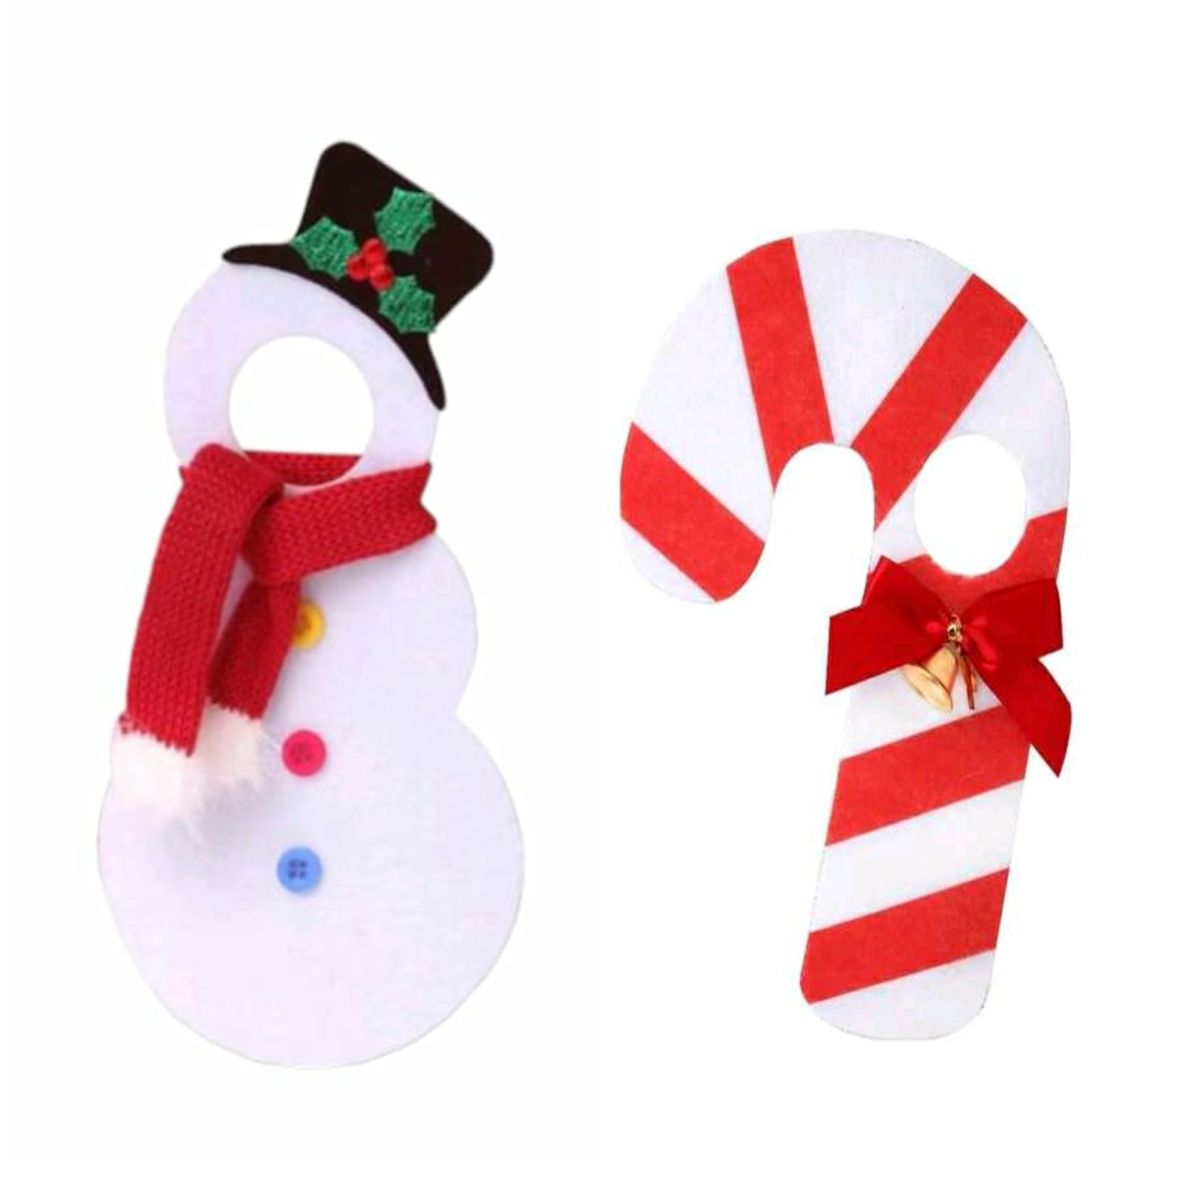 Little Elf Doll Accessories - Snowman & Candy Cane